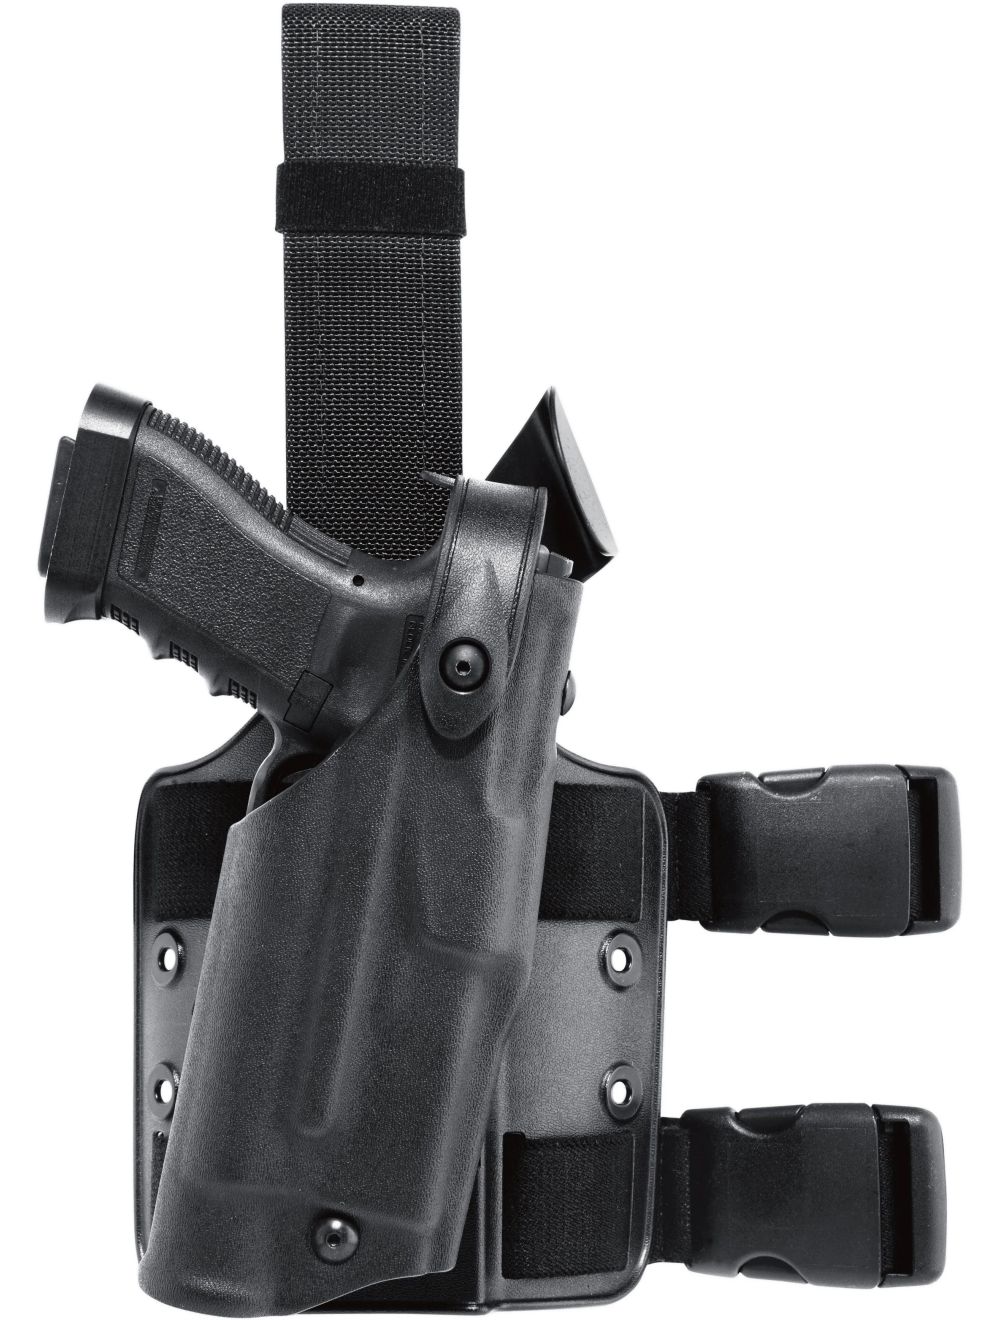 Model 6304 ALS/SLS Tactical Holster for Glock 17 w/ Light